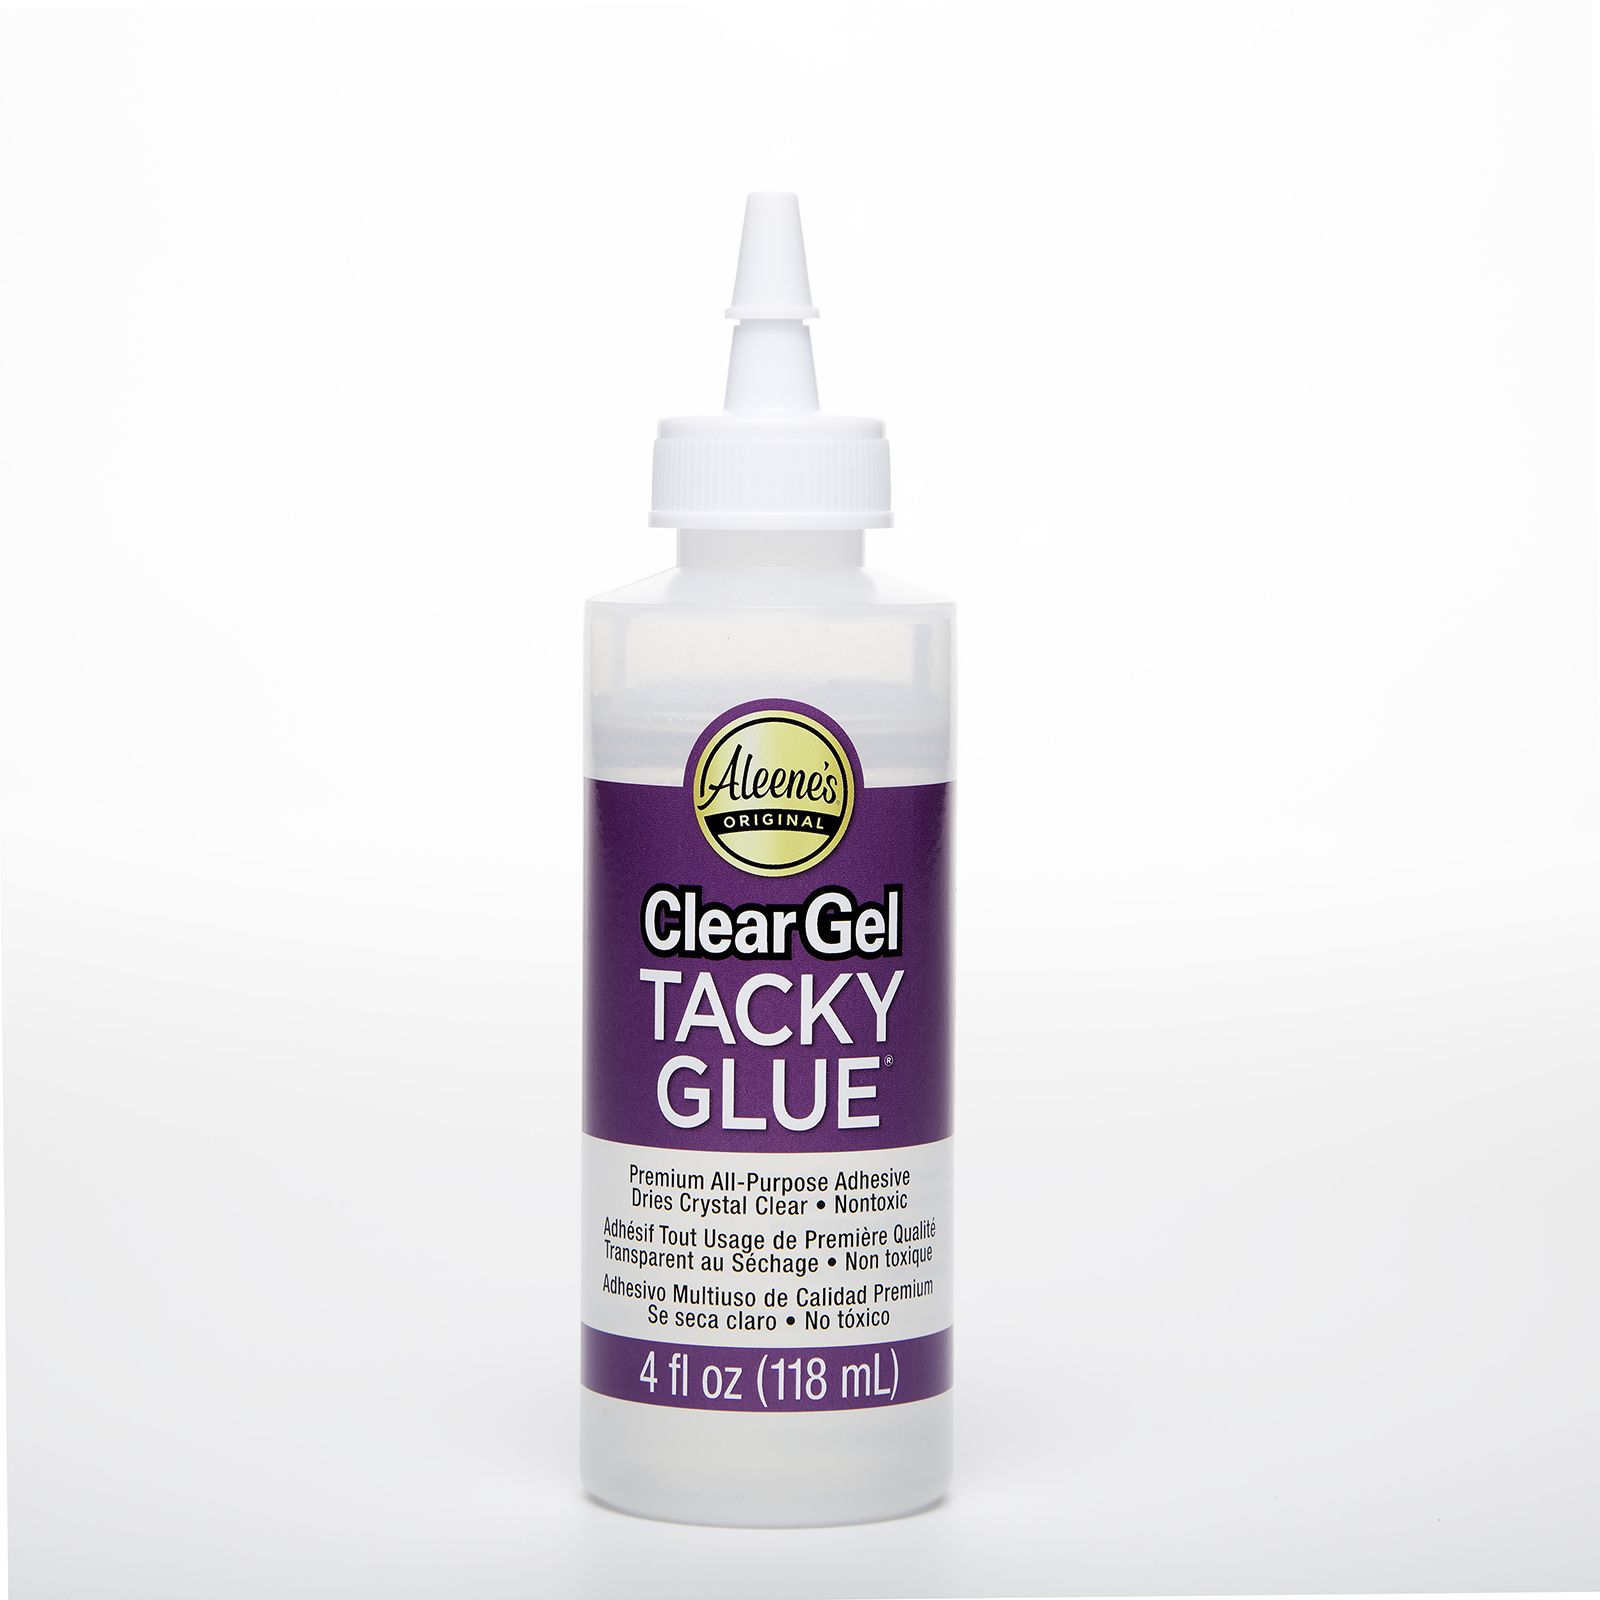 Aleene's • Original clear gel tacky glue 118ml